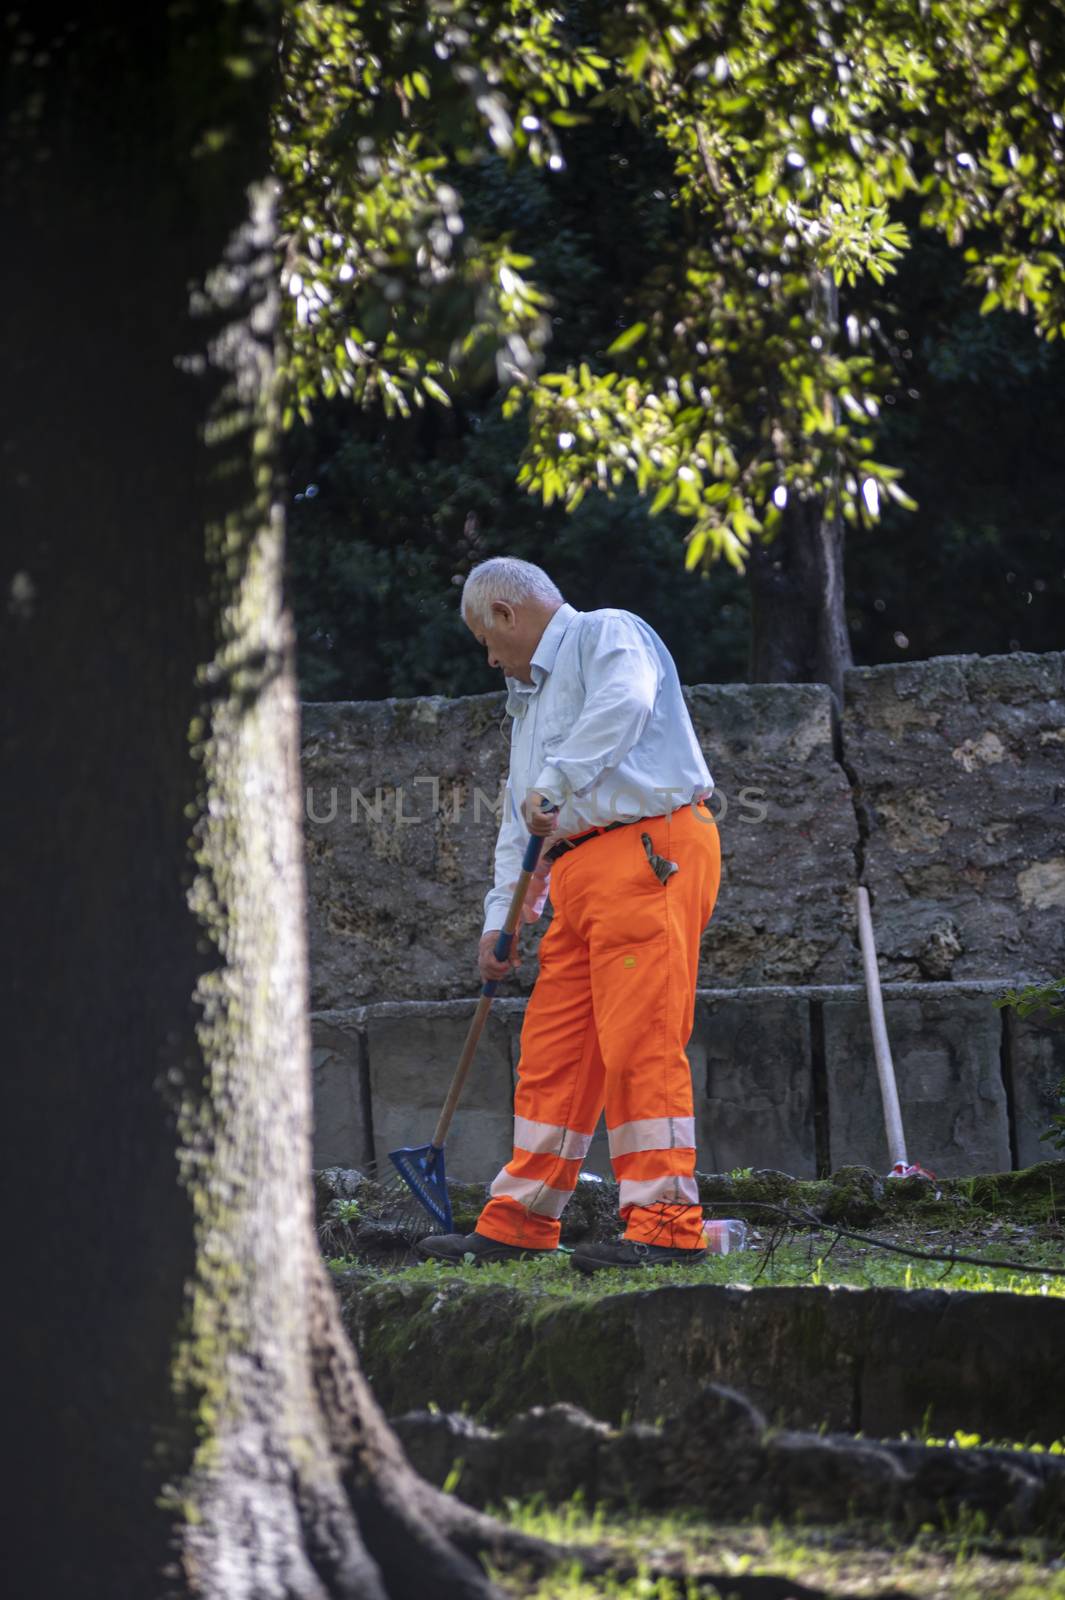 terni,itali october 05 2020:municipality employee gardening in a public park